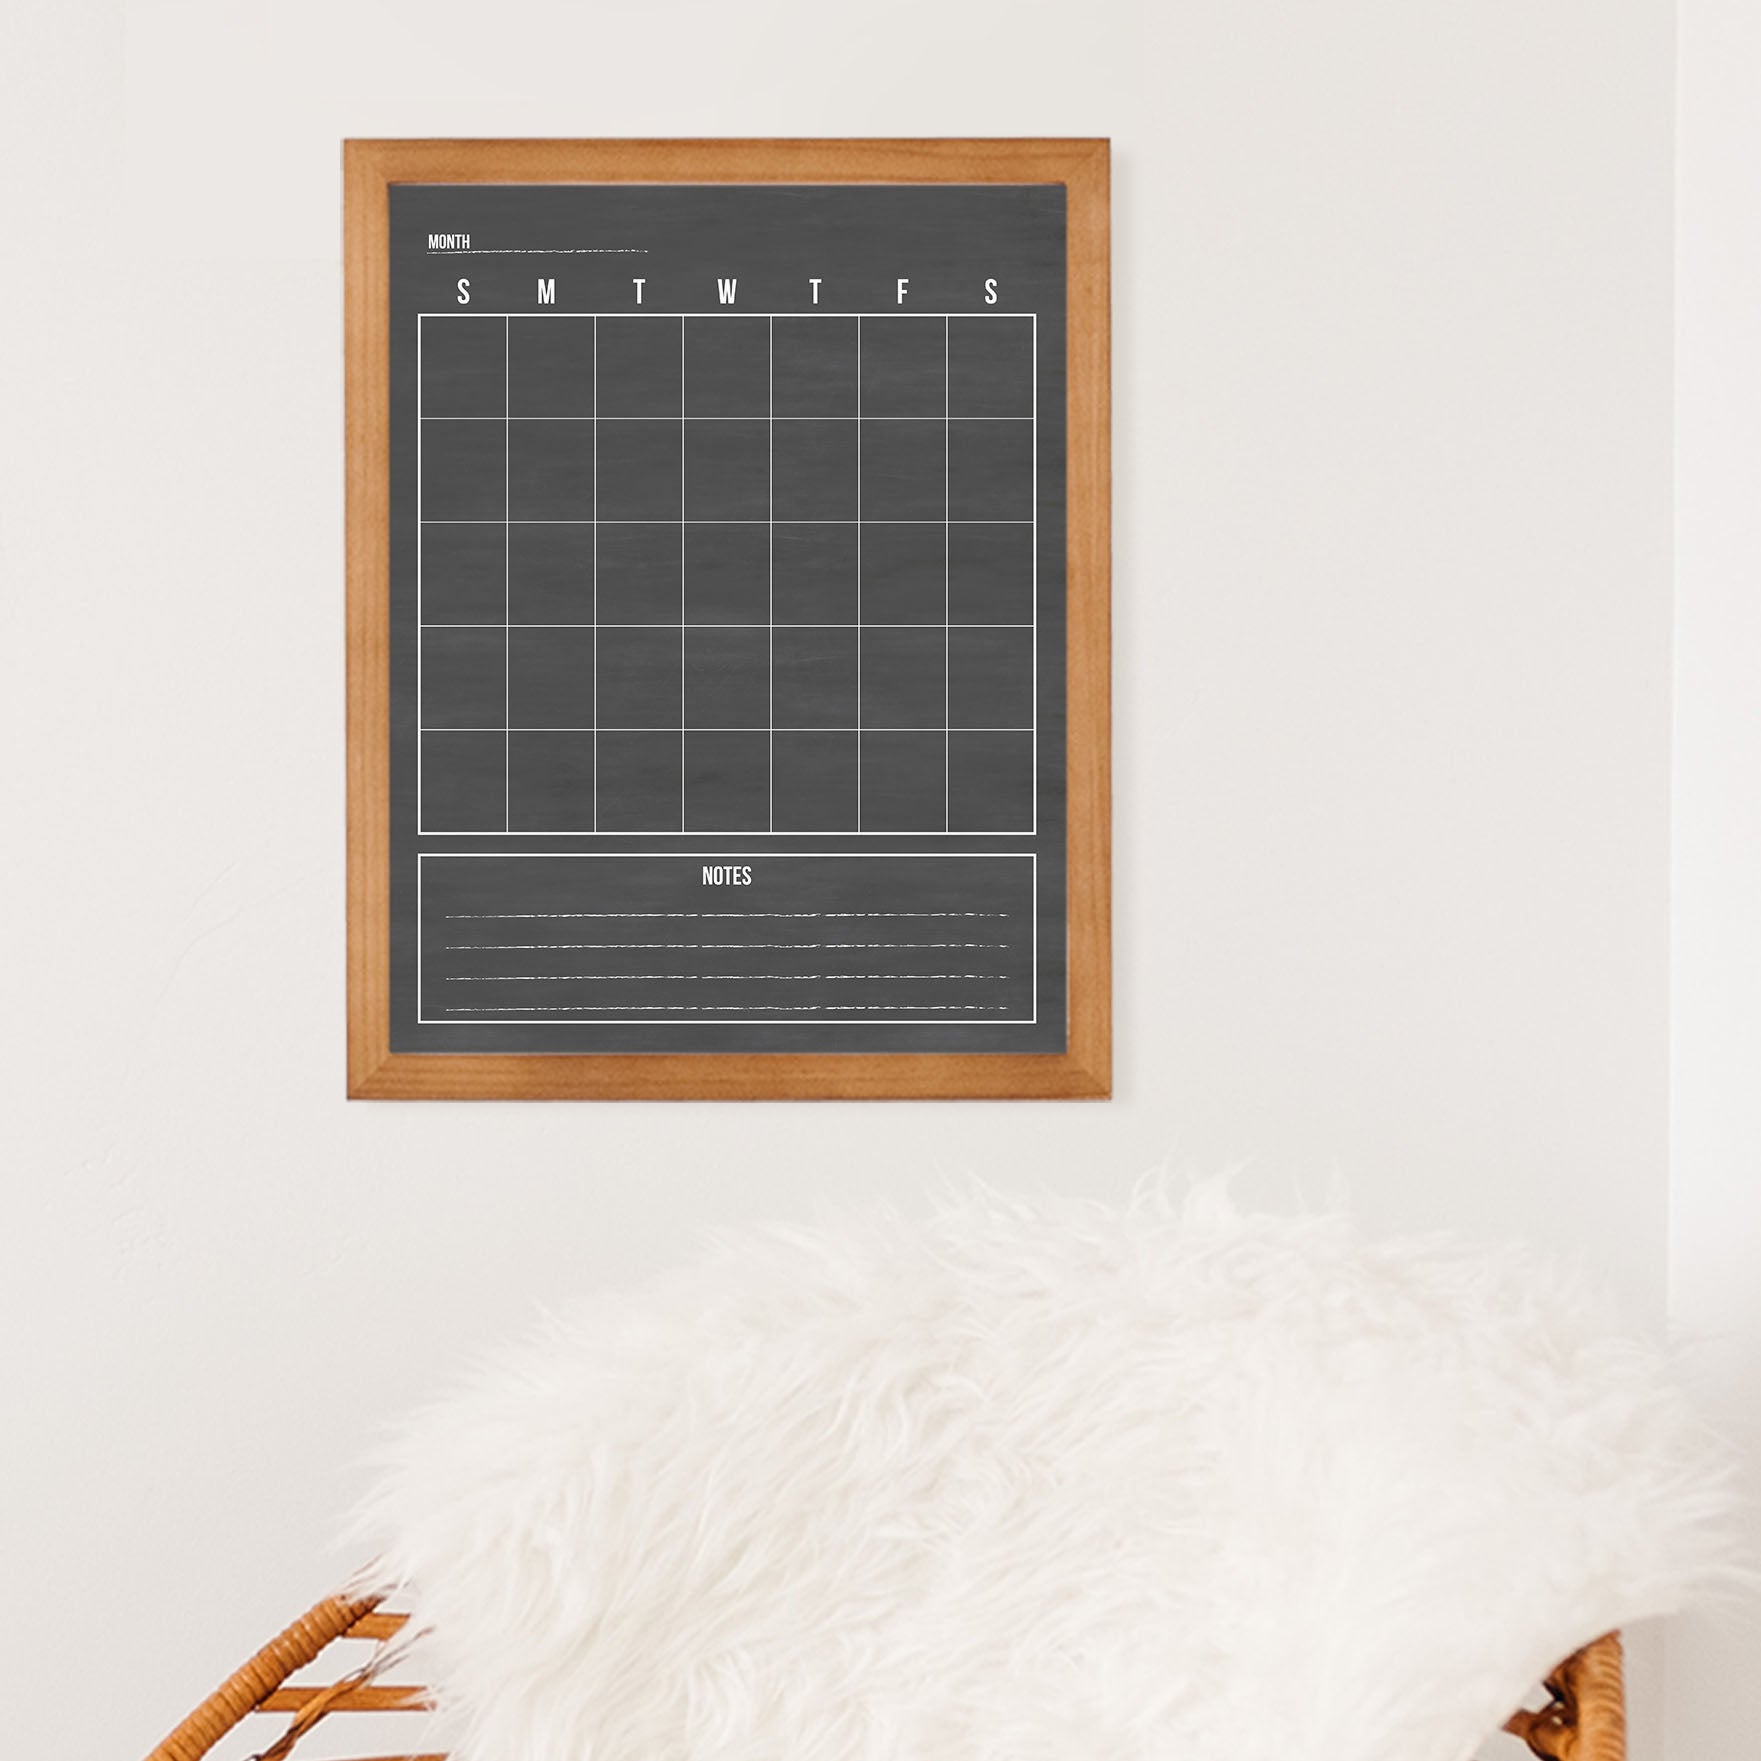 Monthly Framed Chalkboard Calendar + 1 section | Vertical Dwyer